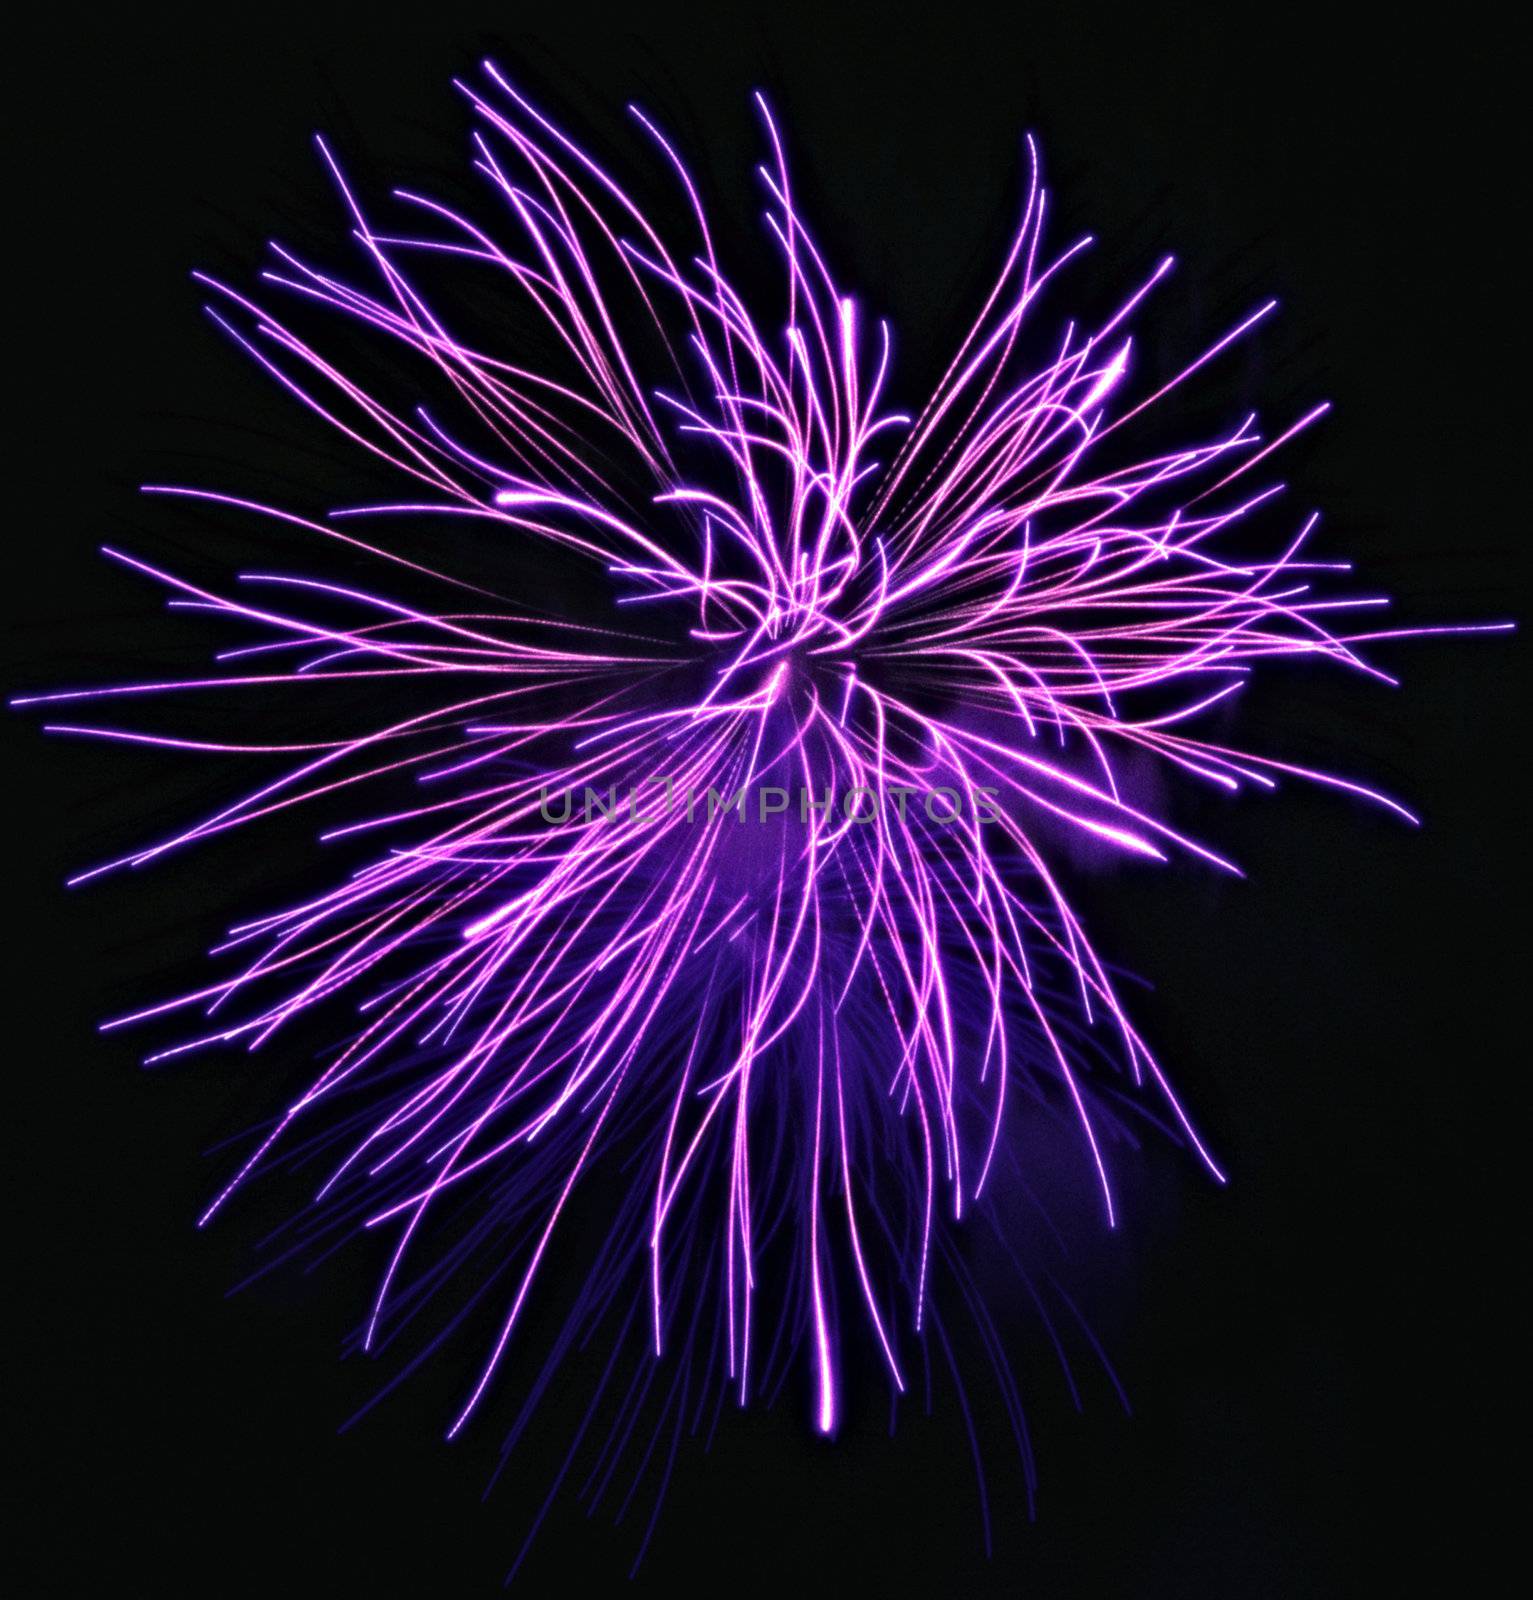 Purple Fireworks released in the dark sky